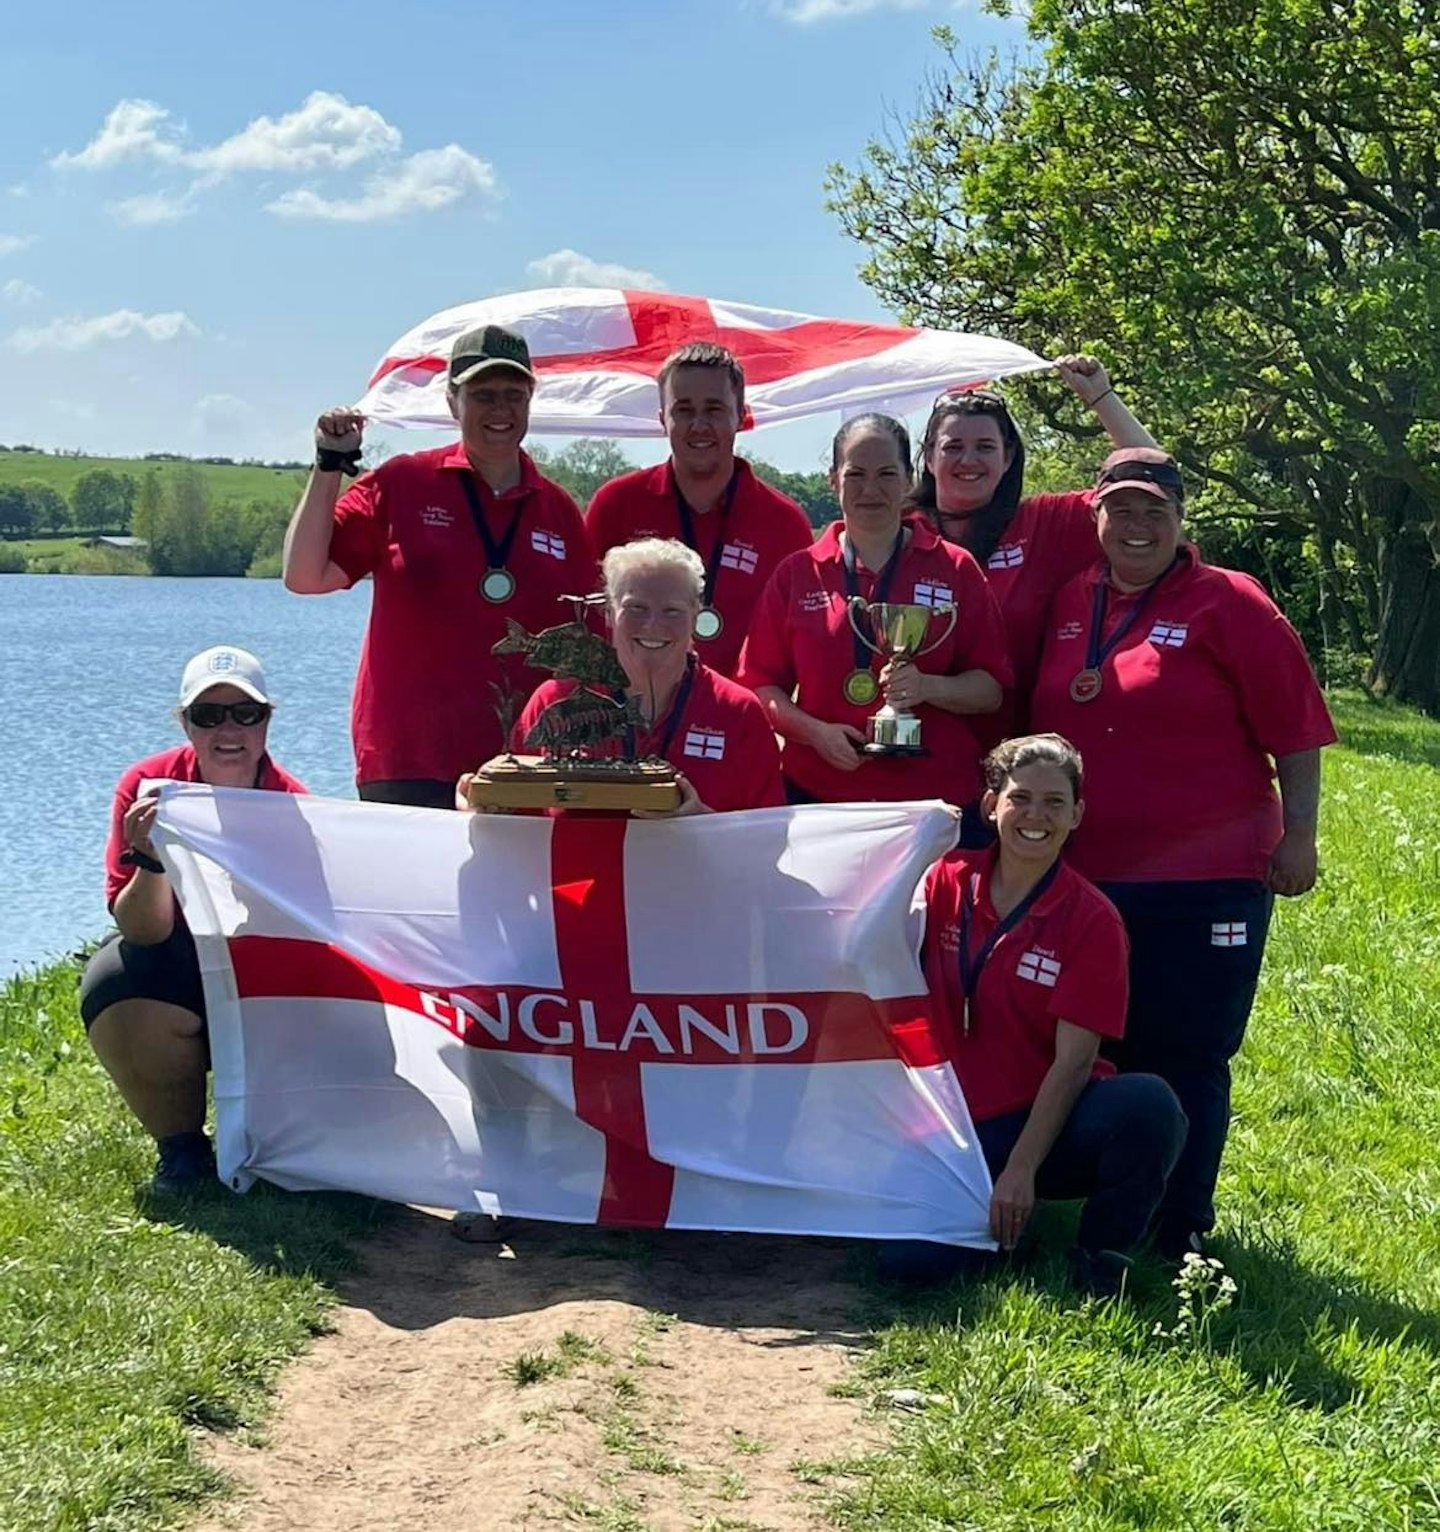 The successful England team